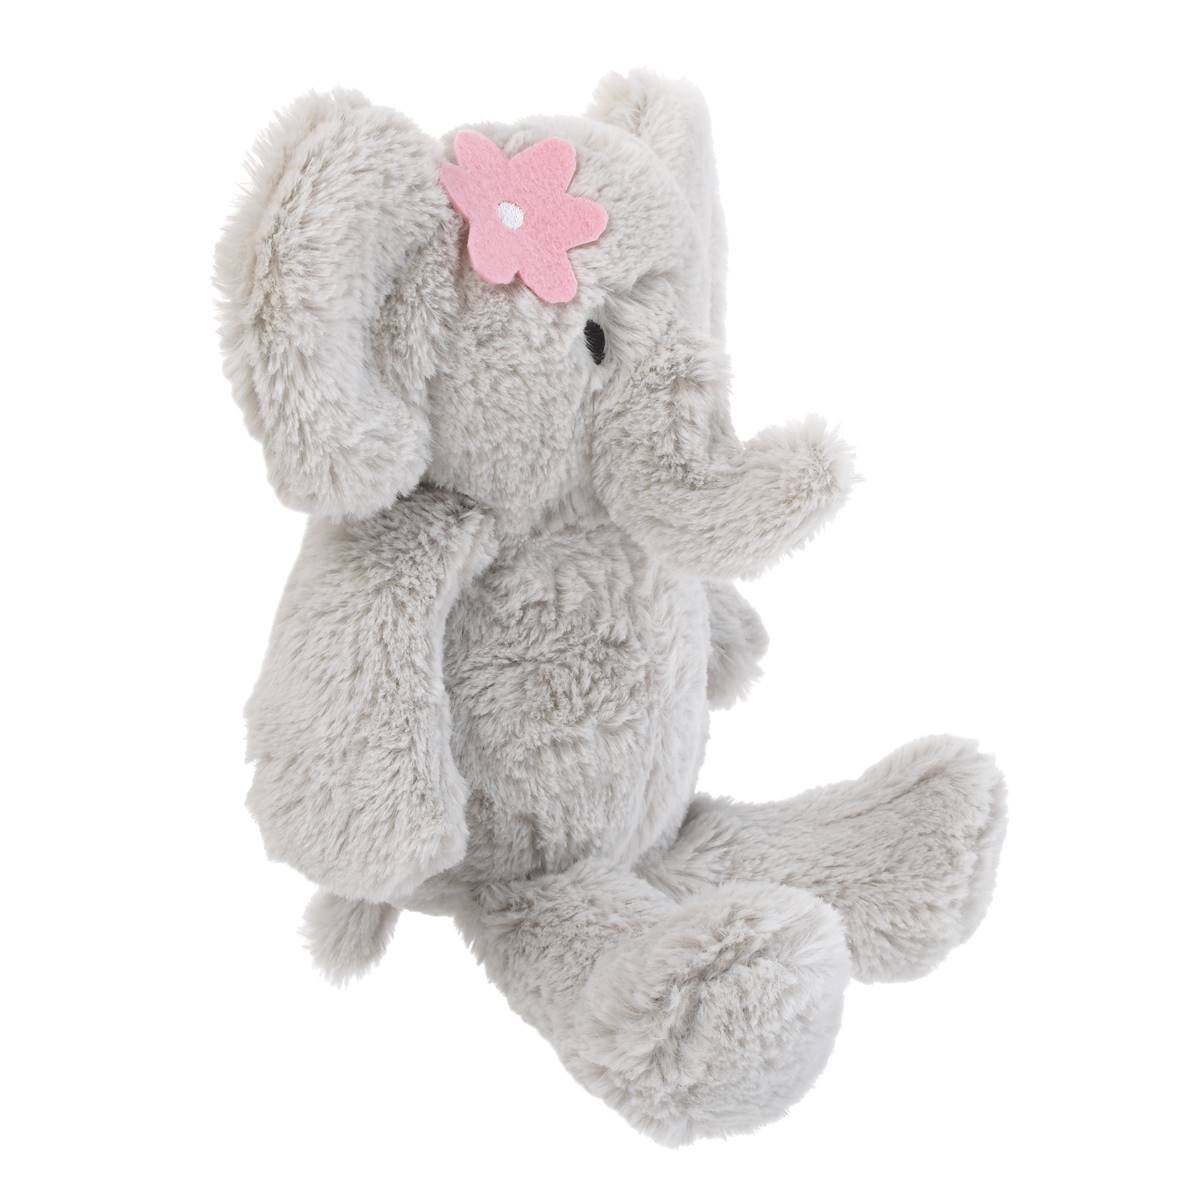 Carters(R) Floral Elephant Grey Plush Stuffed Animal